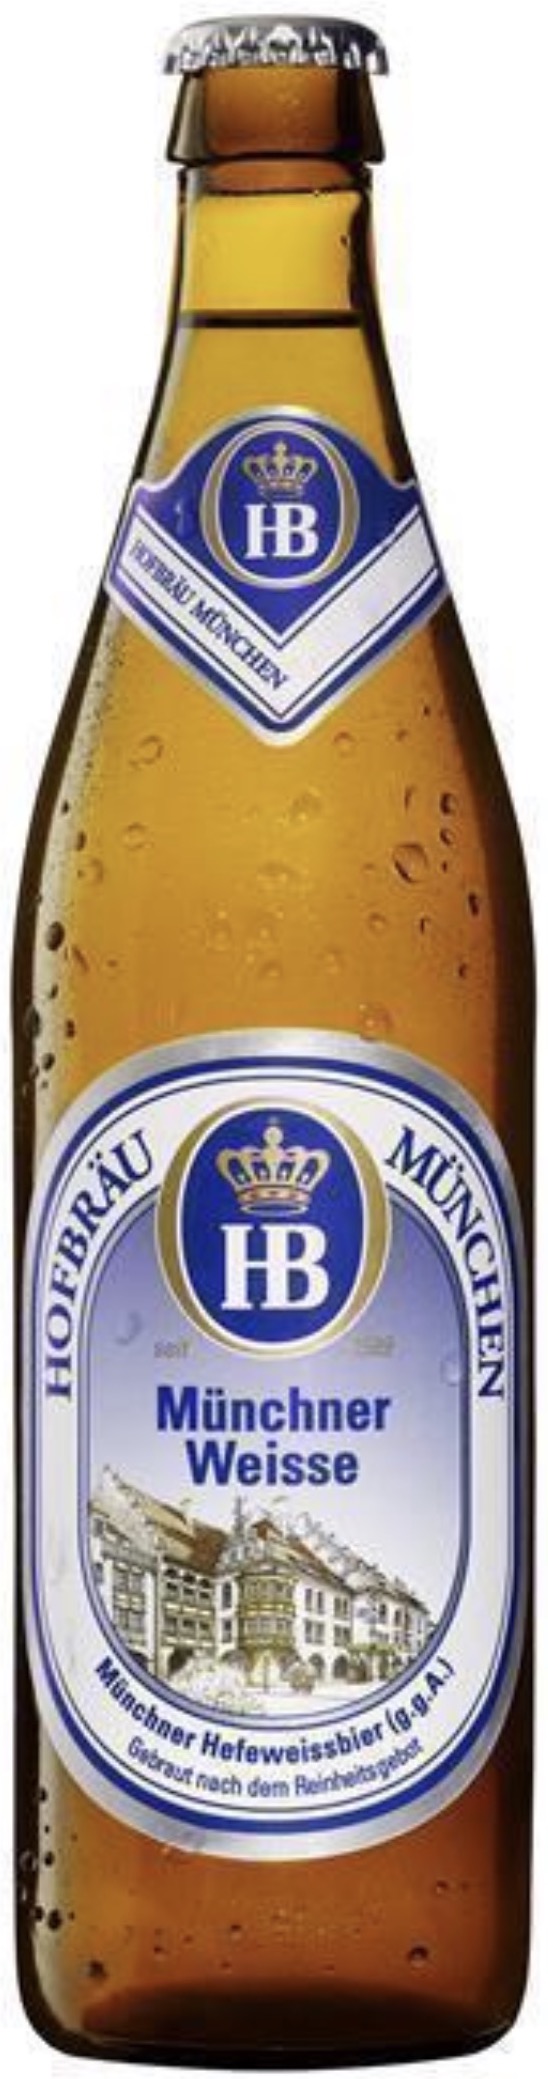 HB Hofbräu Münchener Weisse 0,5L MEHRWEG